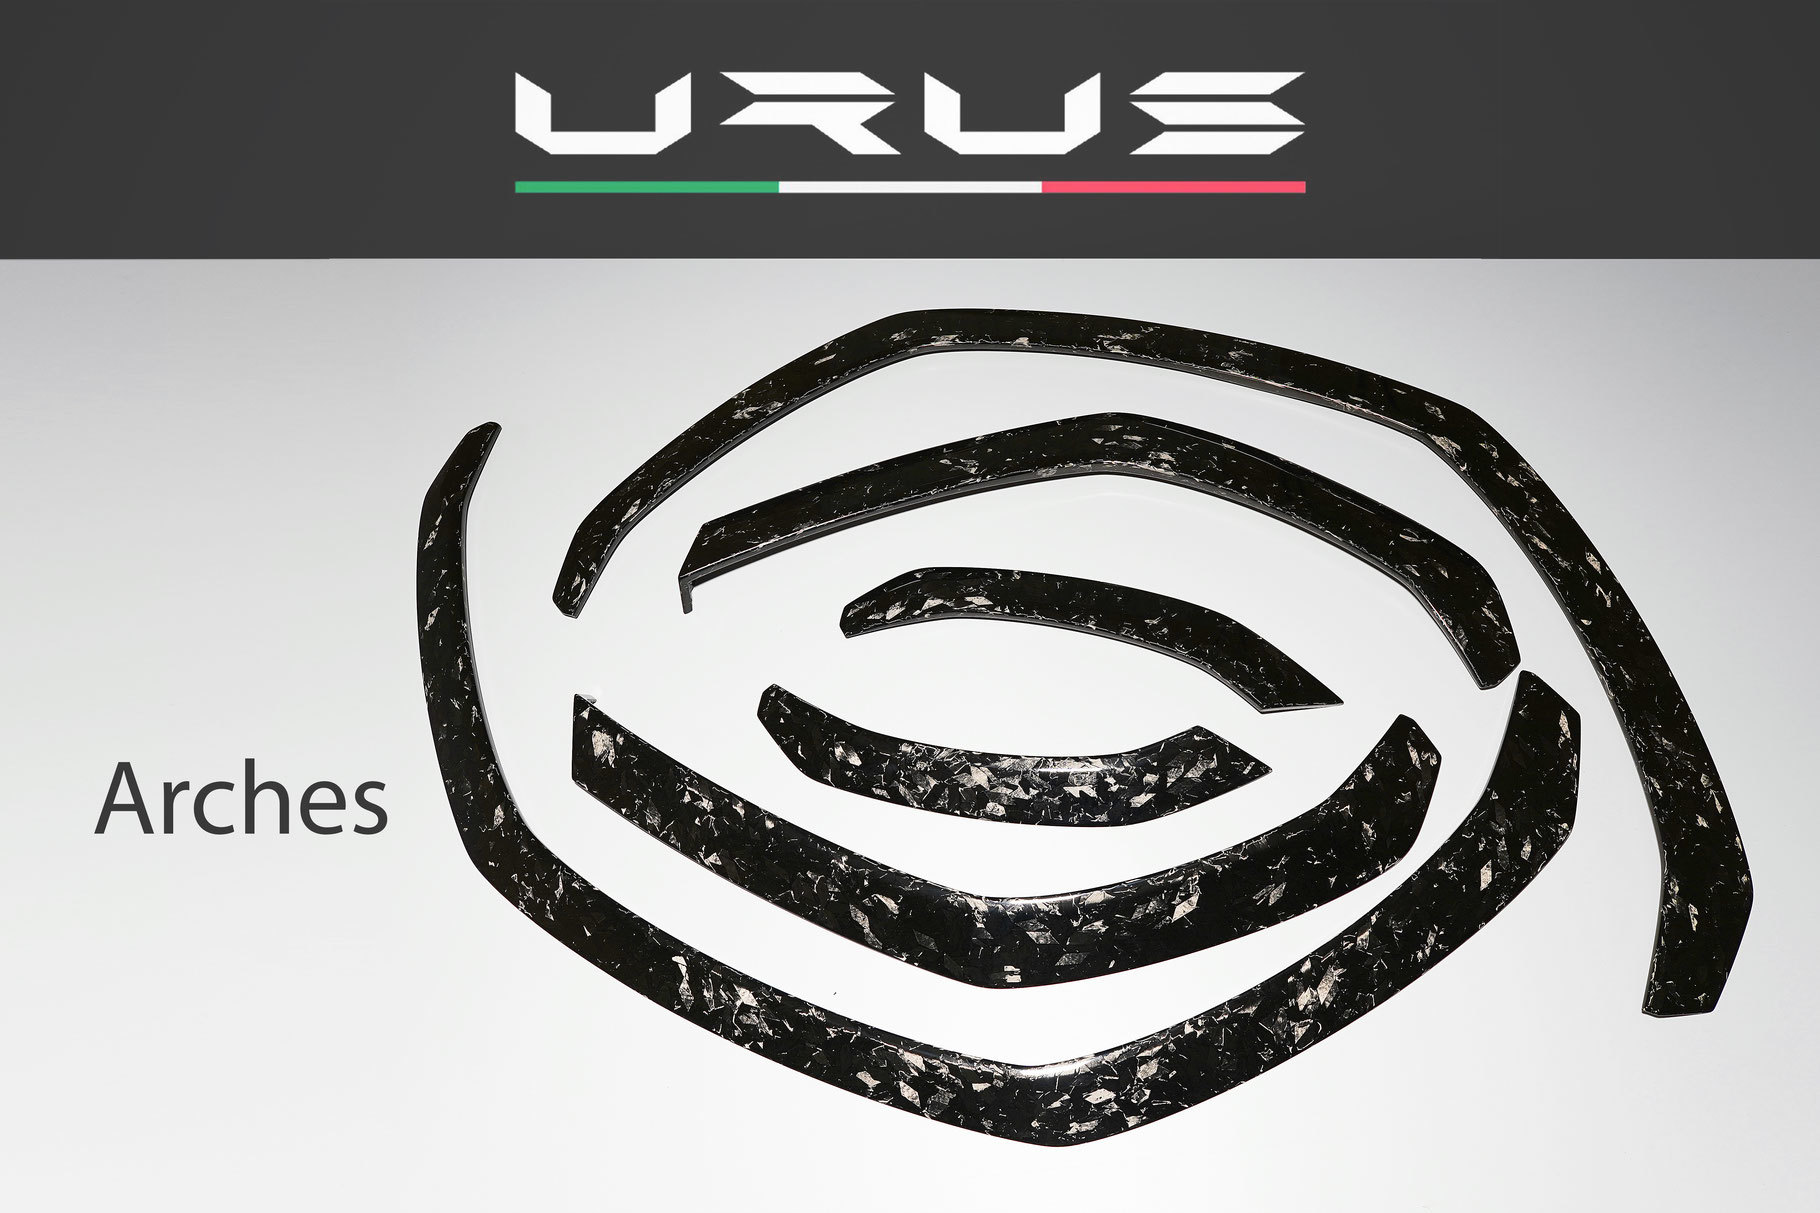 Hodoor Performance Carbon fiber arches Corsa for Lamborghini Urus new style